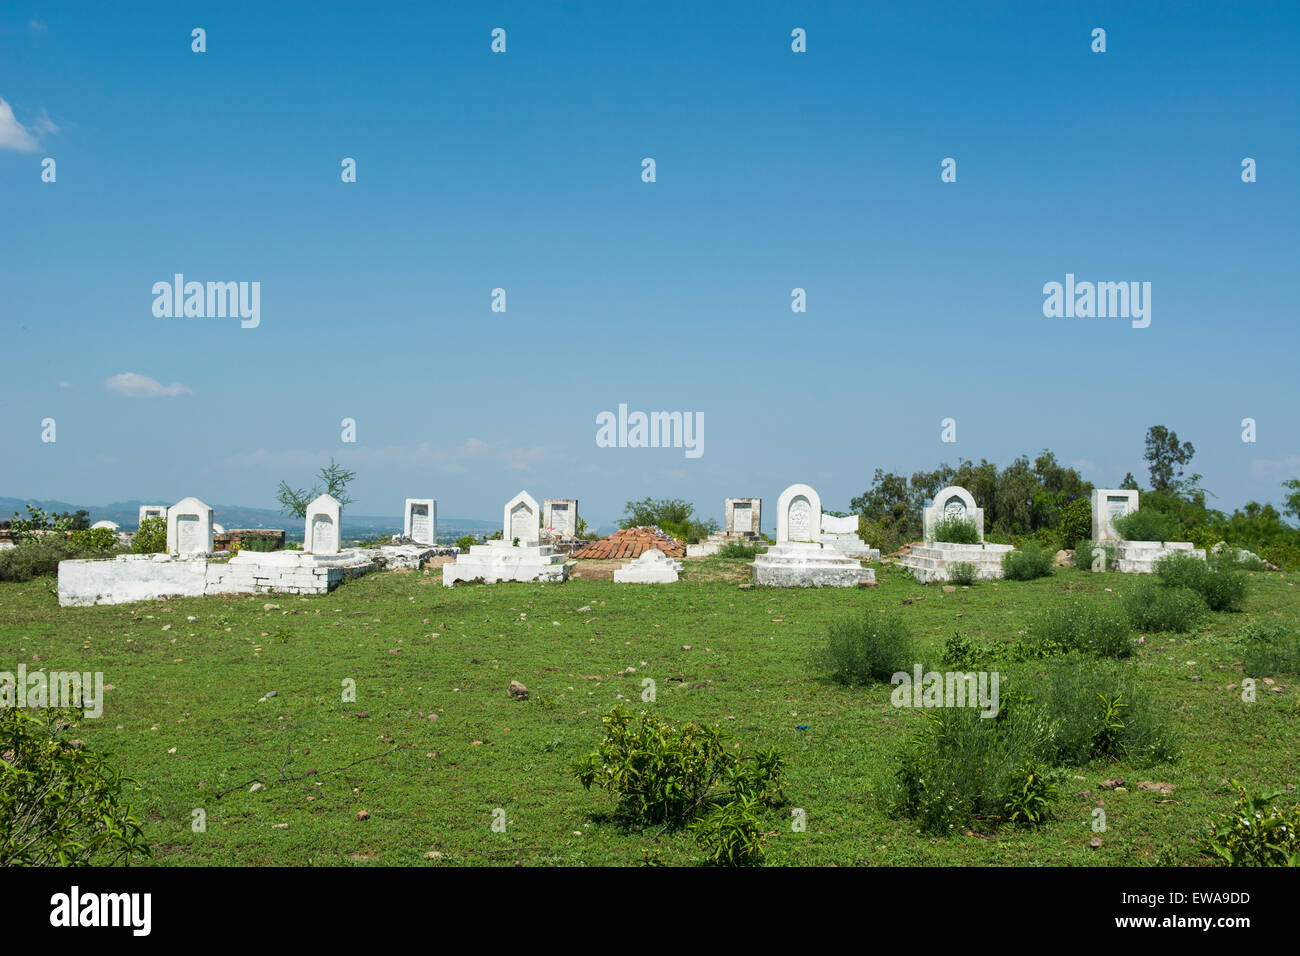 Graveyard for Muslims Jhelum Pakistan Stock Photo